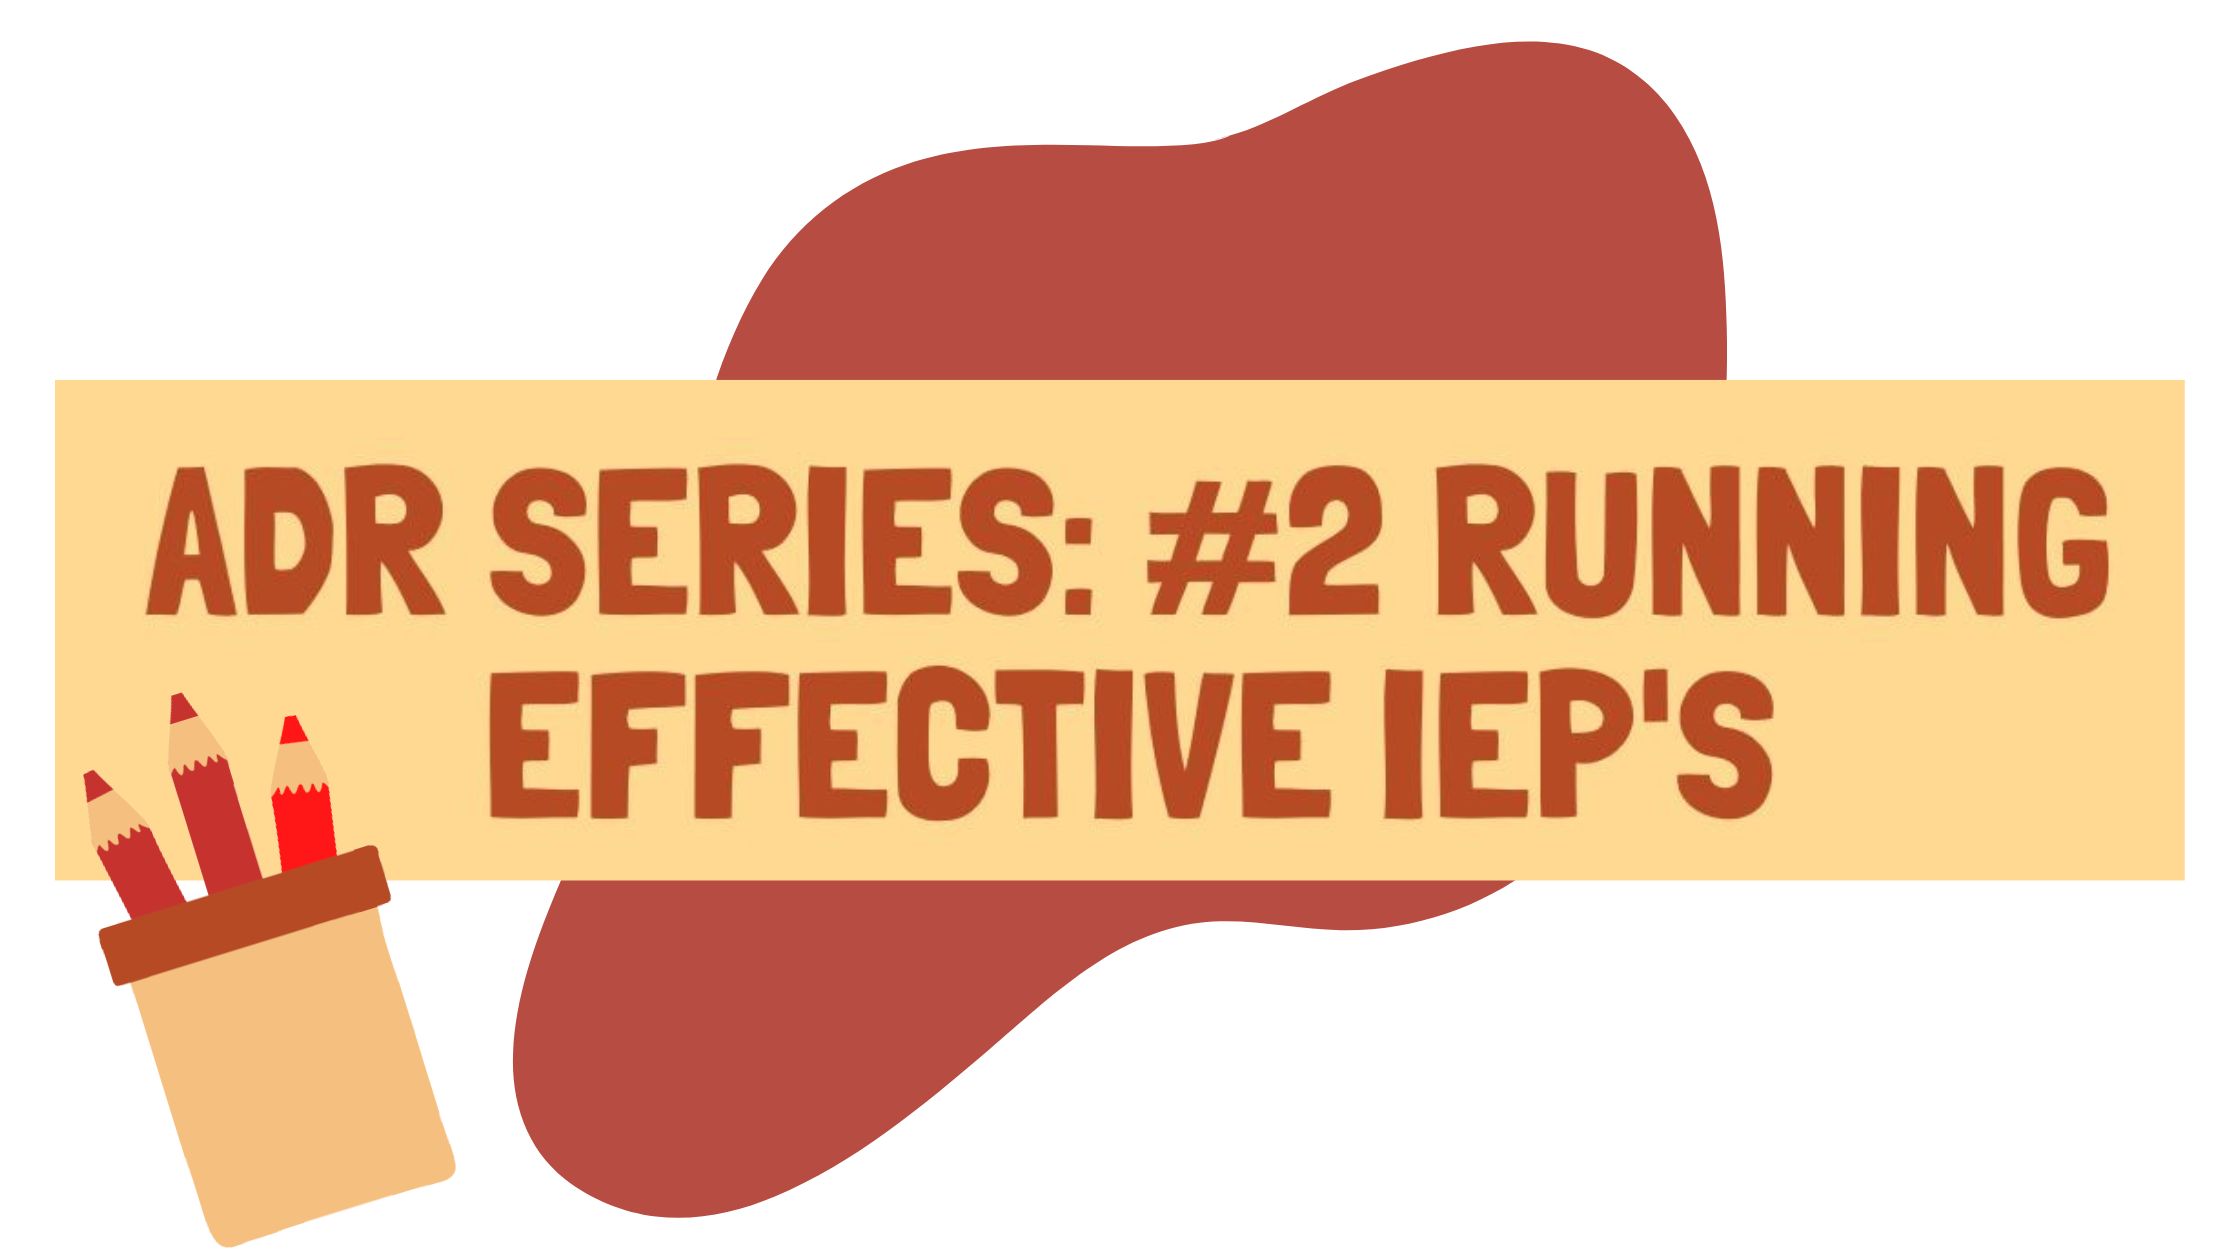 ADR Series: #2 Running Effective IEP